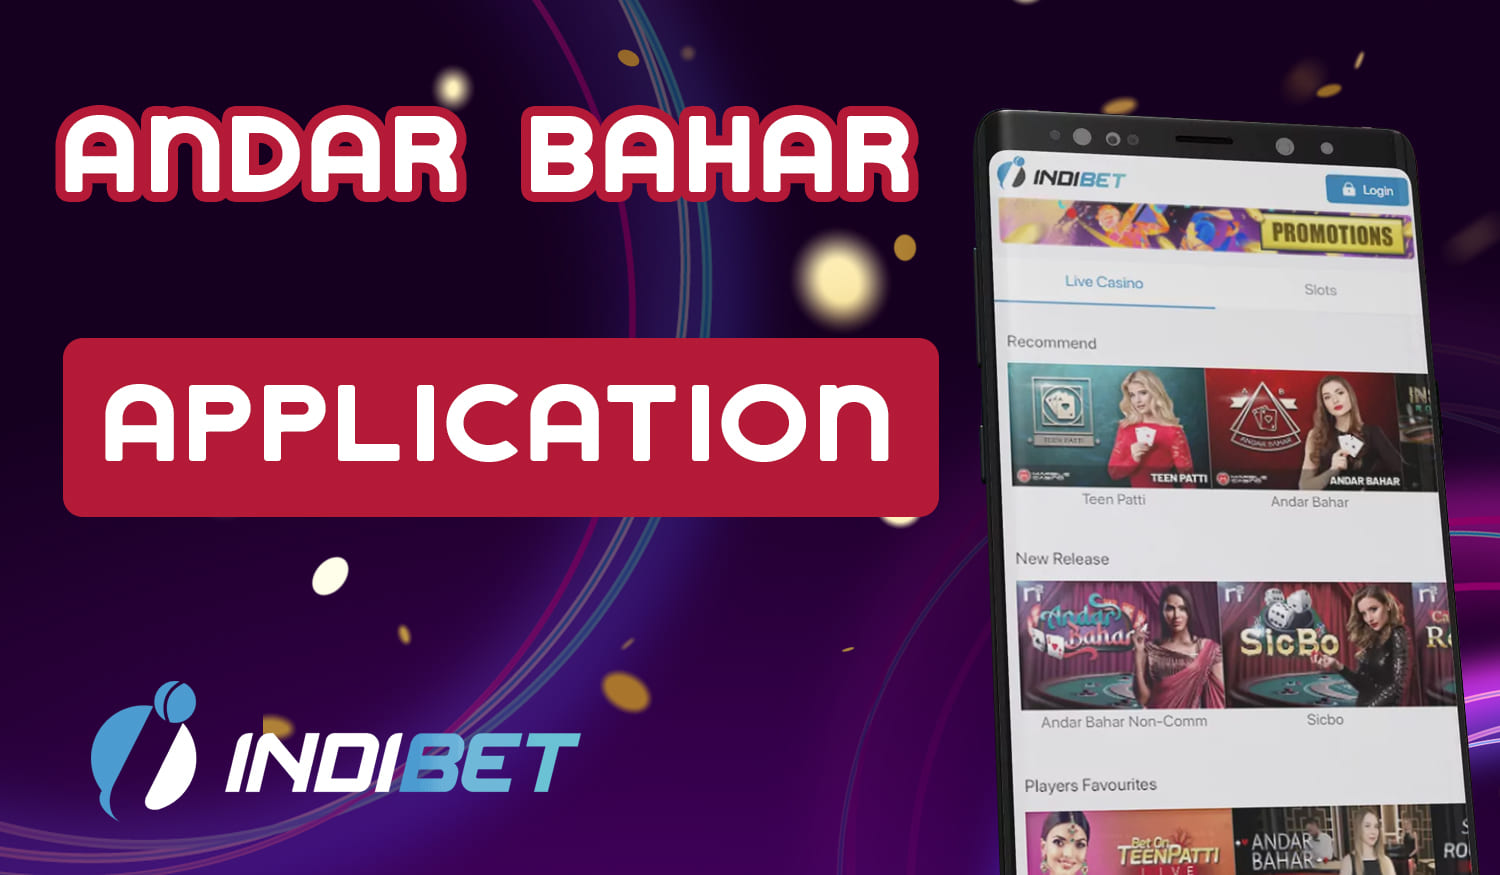 Instructions for Andar Bahar fans how to download Indibet mobile app